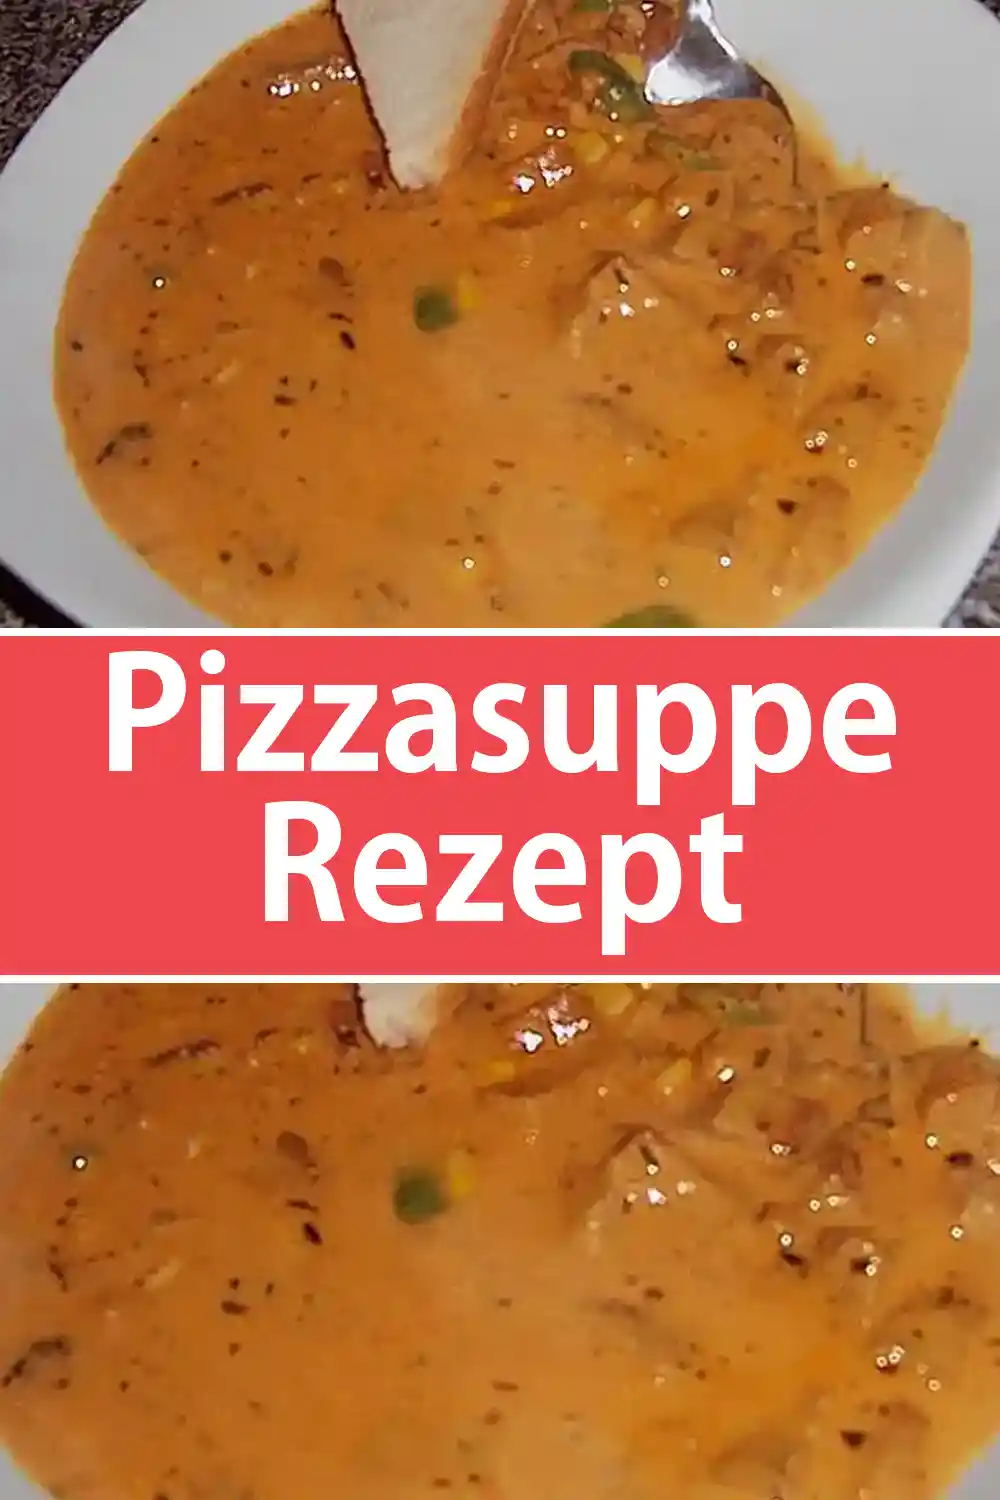 Pizzasuppe Rezept